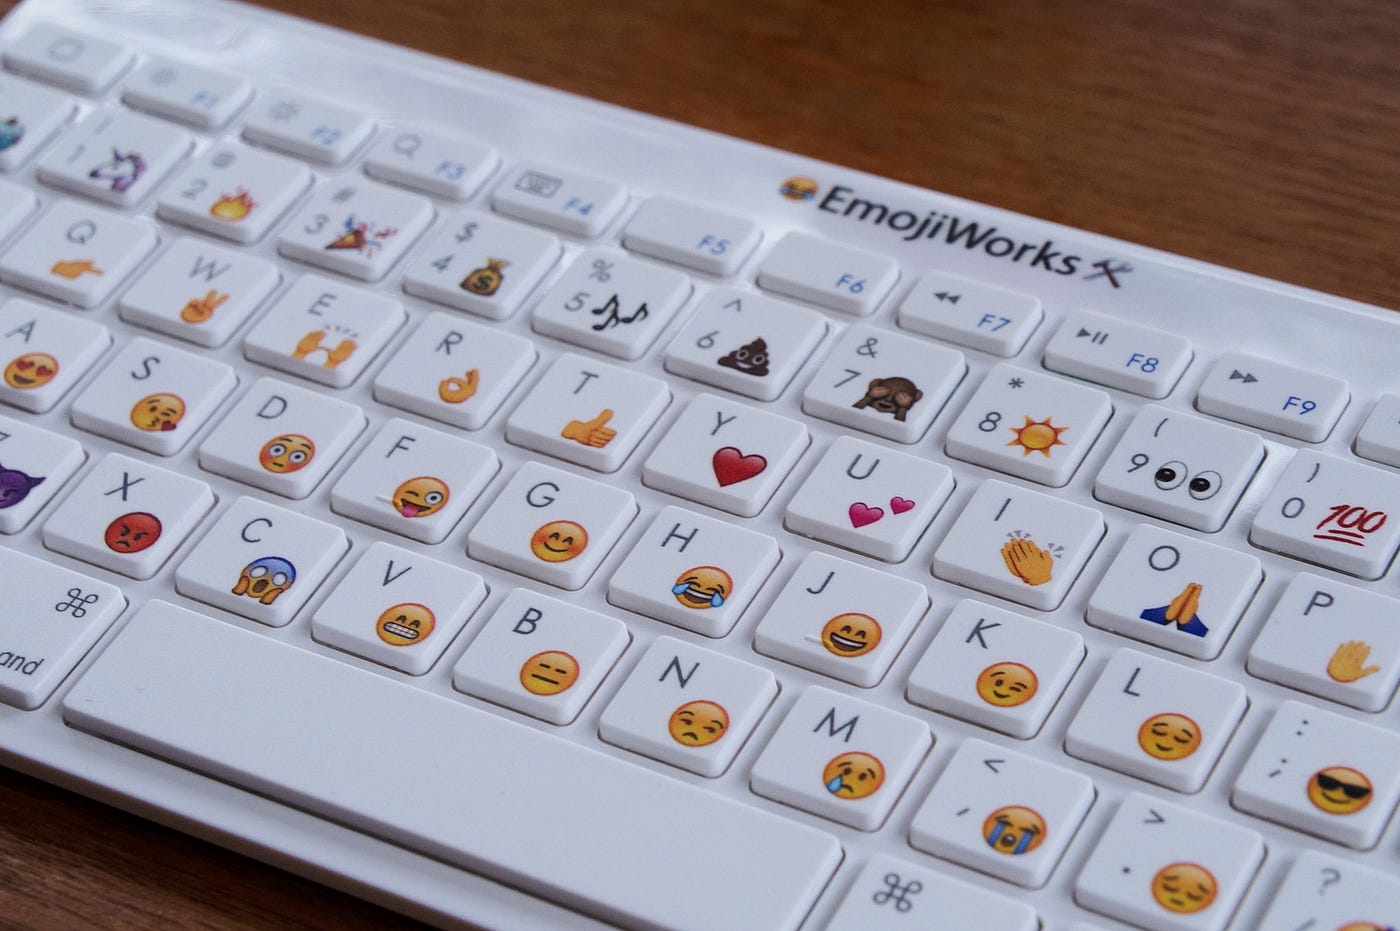 Aprende a inserir símbolos a partir do teclado do teu computador